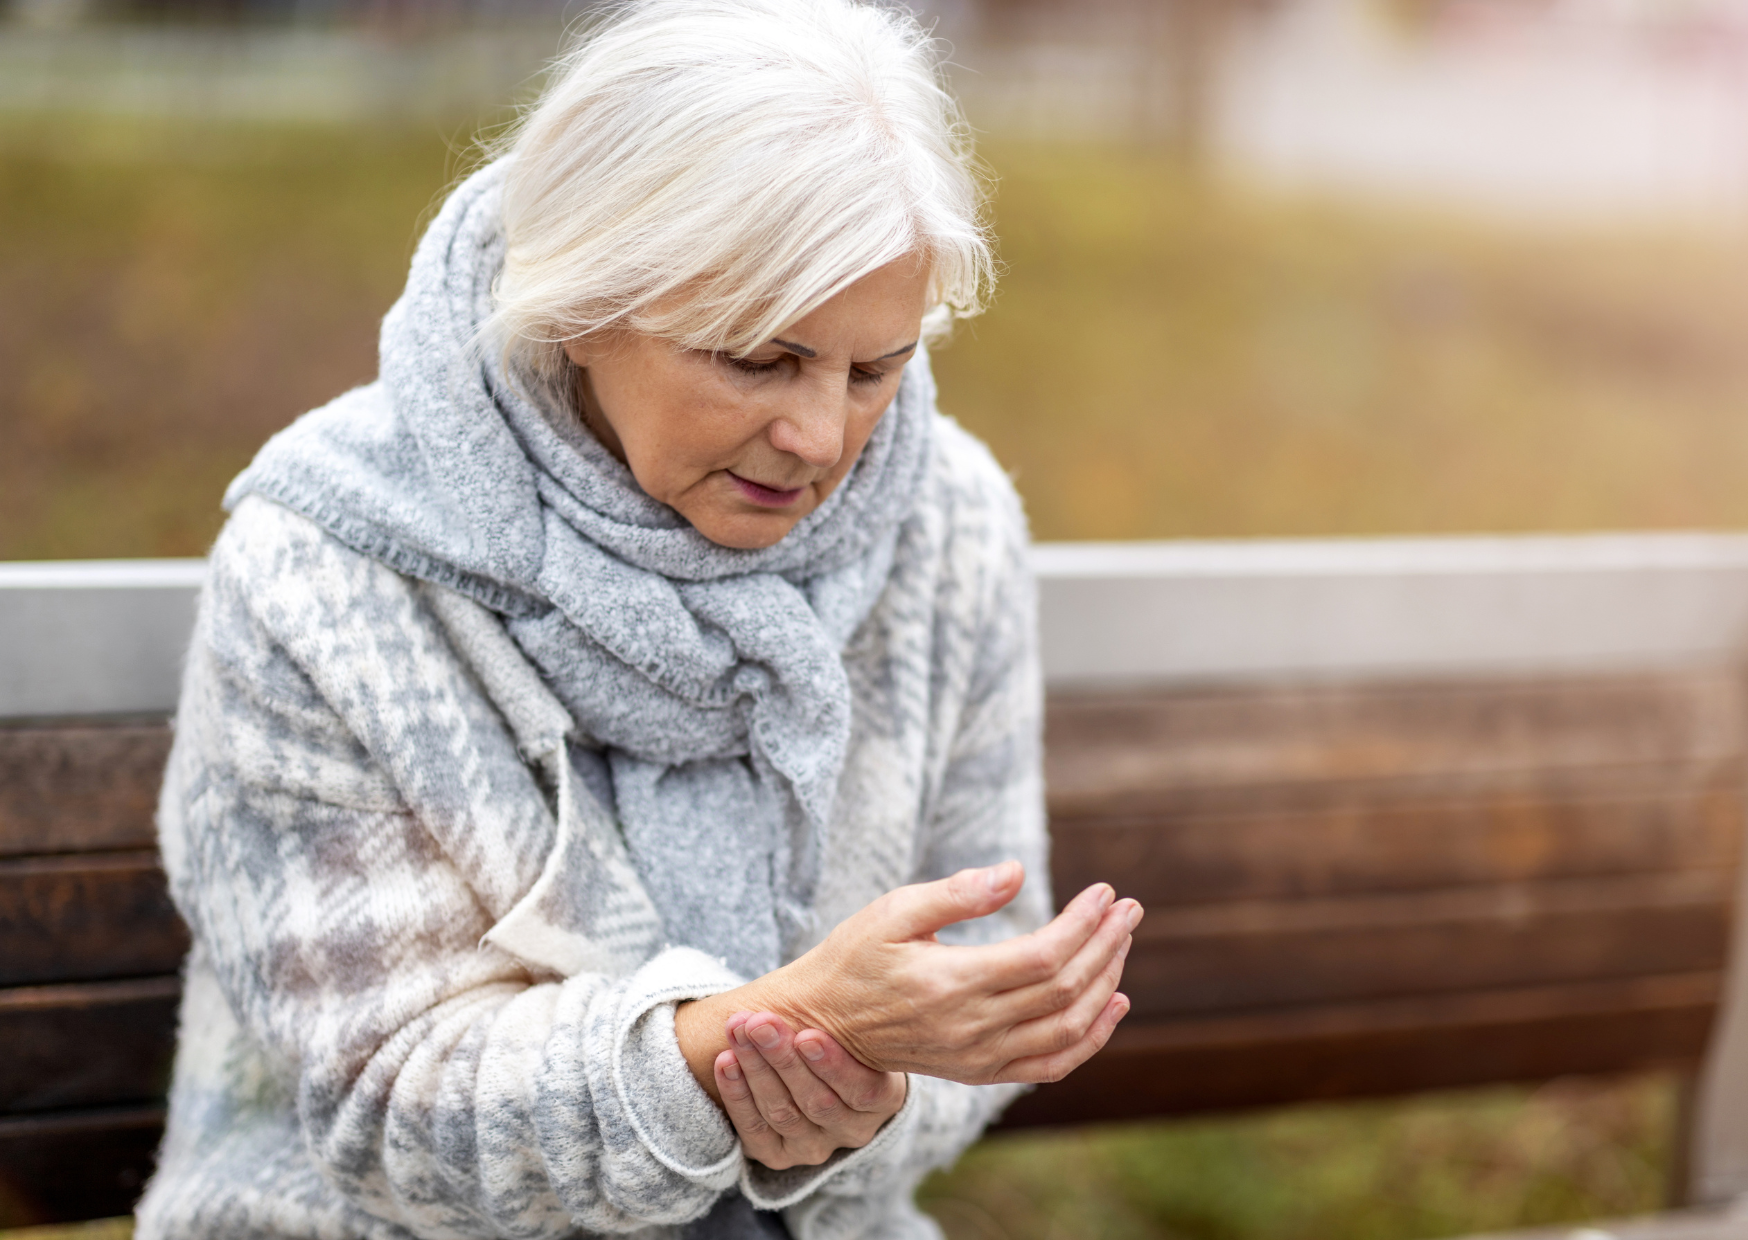 Arthritis | Apotheker informieren über Gelenkentzündung › Info-Seite -  medikamente-per-klick